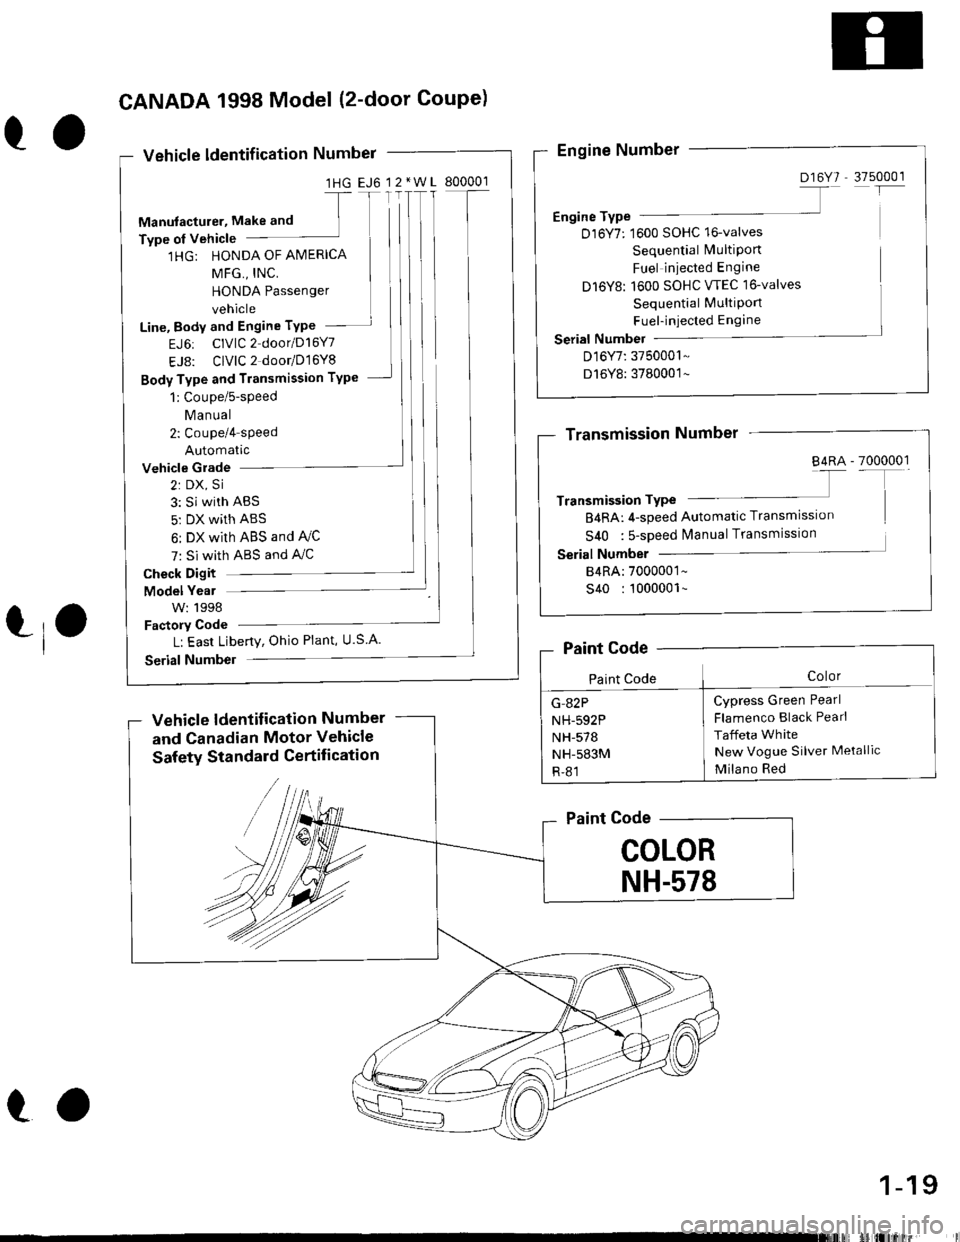 HONDA CIVIC 1997 6.G User Guide Vehicle ldentif ication Numbel
1HG EJ6 12*W
1HG: HONDA OF AMERICA
MFG,, INC,
HONDA Passenger
vehicle
Line, Body and Engine TYPe
EJ6: CIVIC 2 door/D16Y7
EJ8: CIVIC 2 dootD16Y8
Body Type and Transmissio